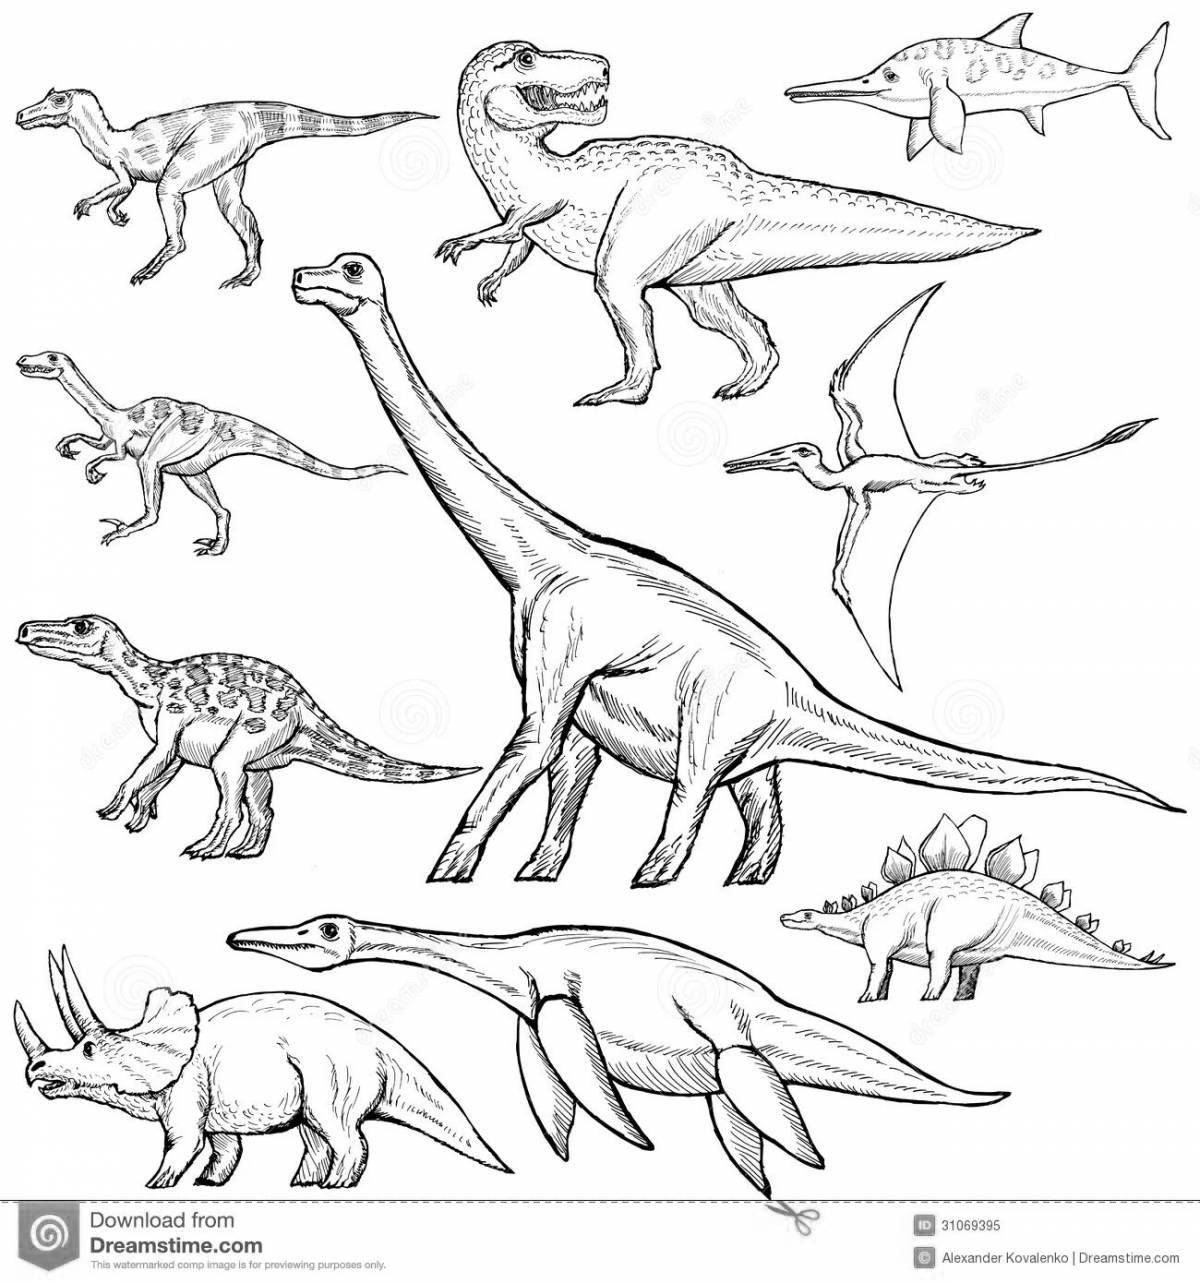 Dinosaurs lot #4